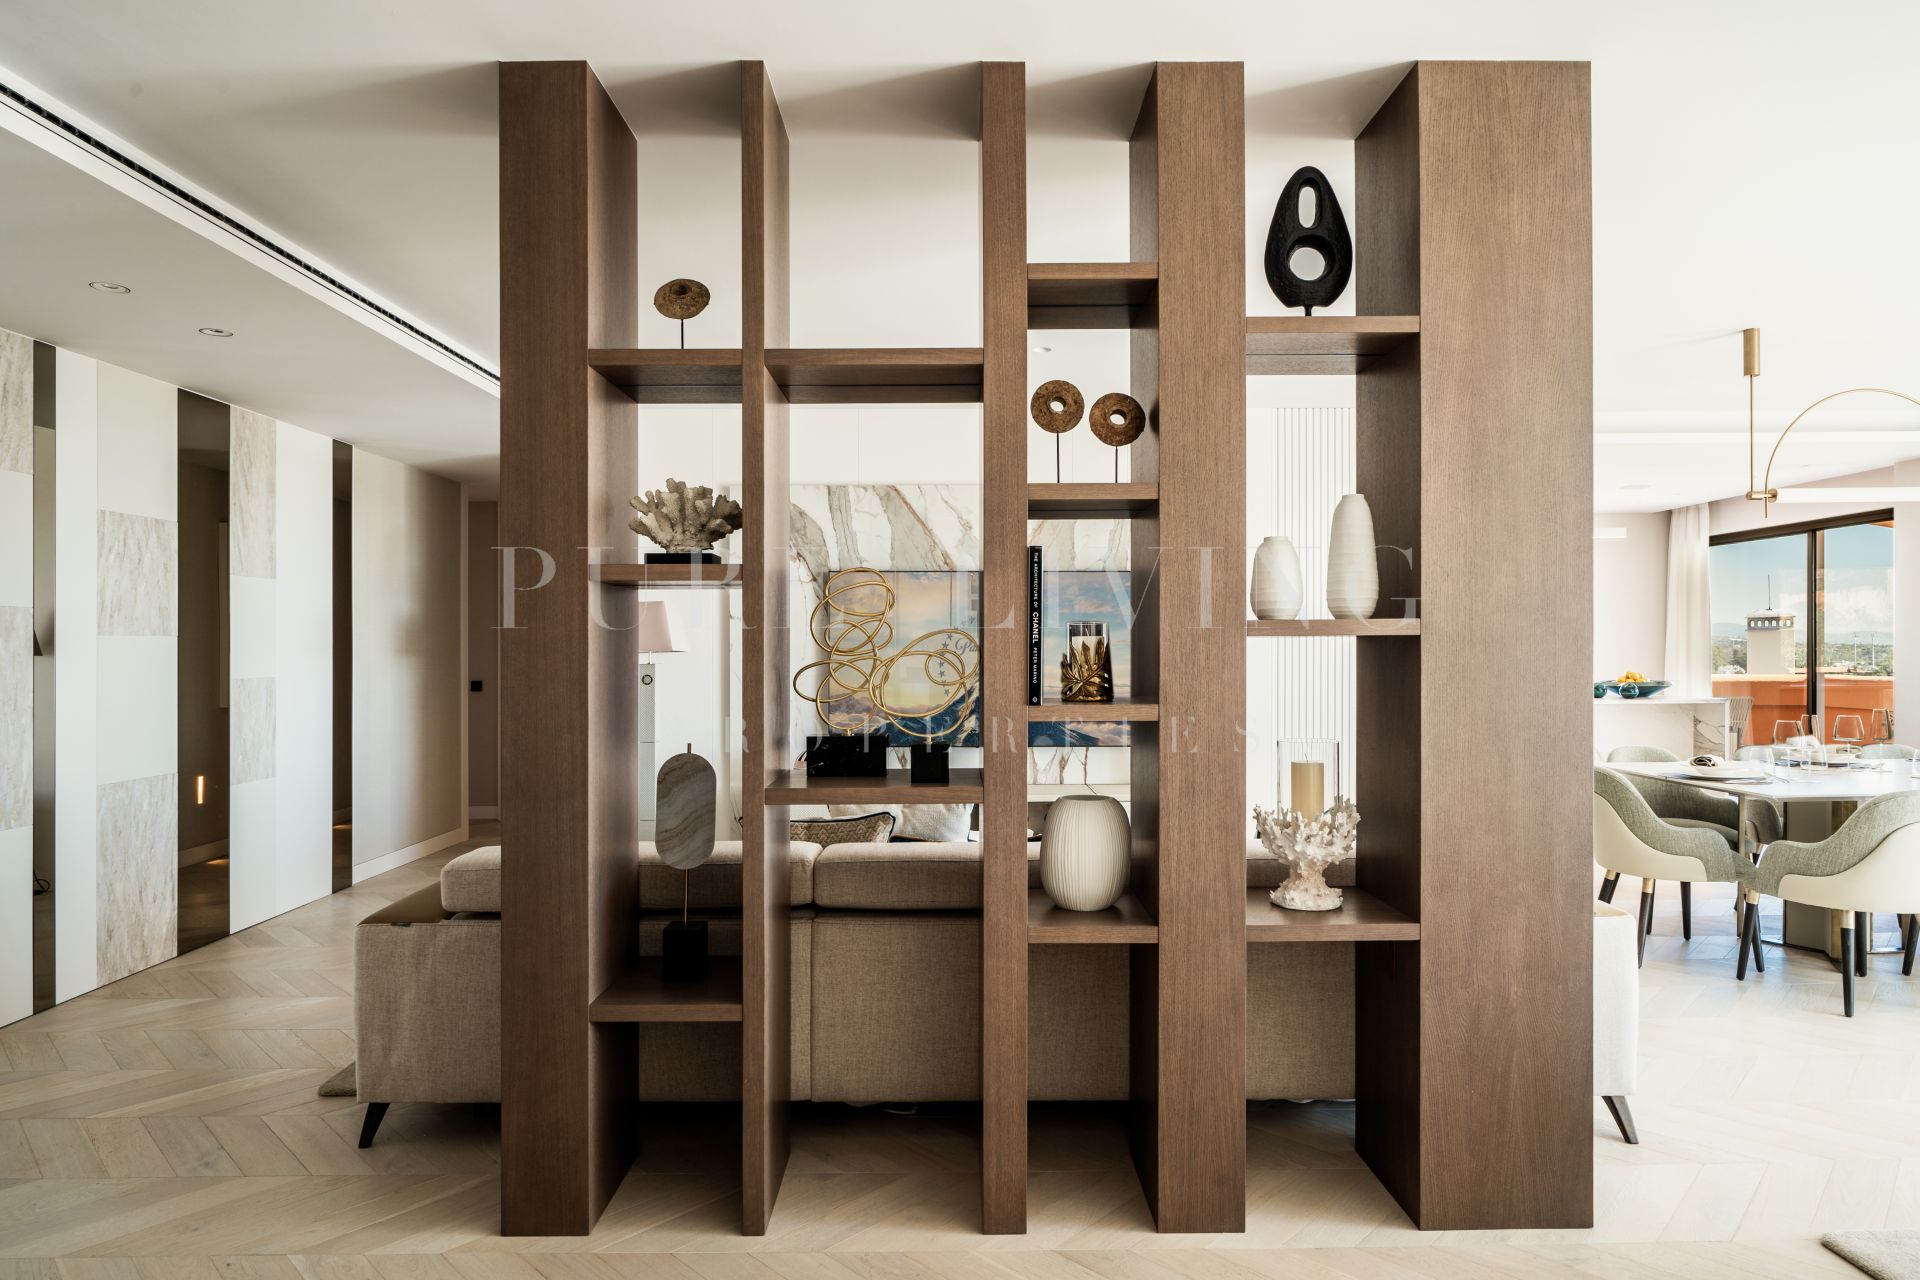 Impressive refurbished four bedroom apartment in Les Belvederes